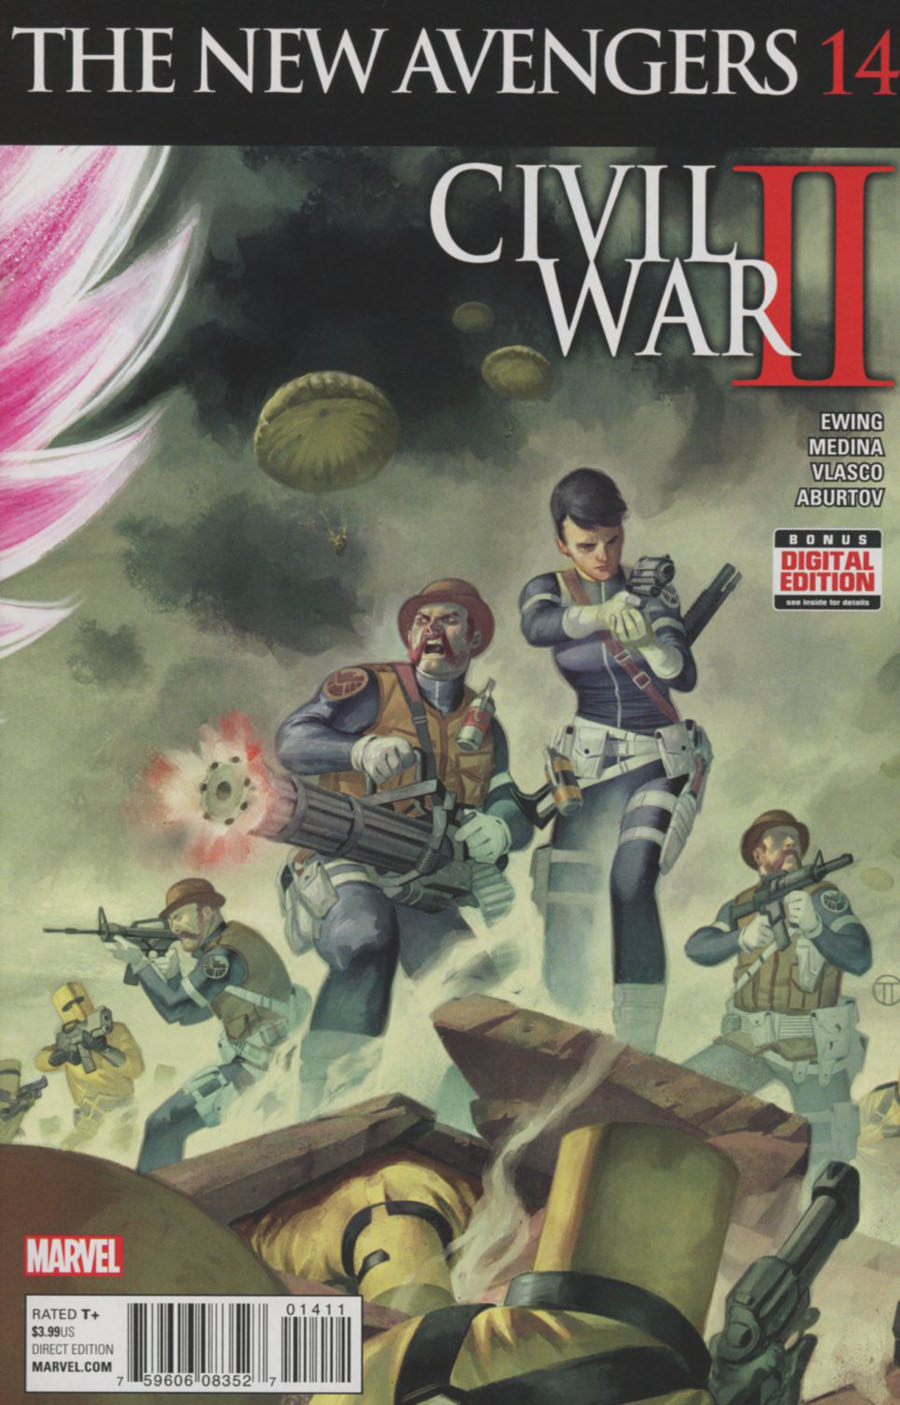 New Avengers Vol 4 #14 (Civil War II Tie-In)